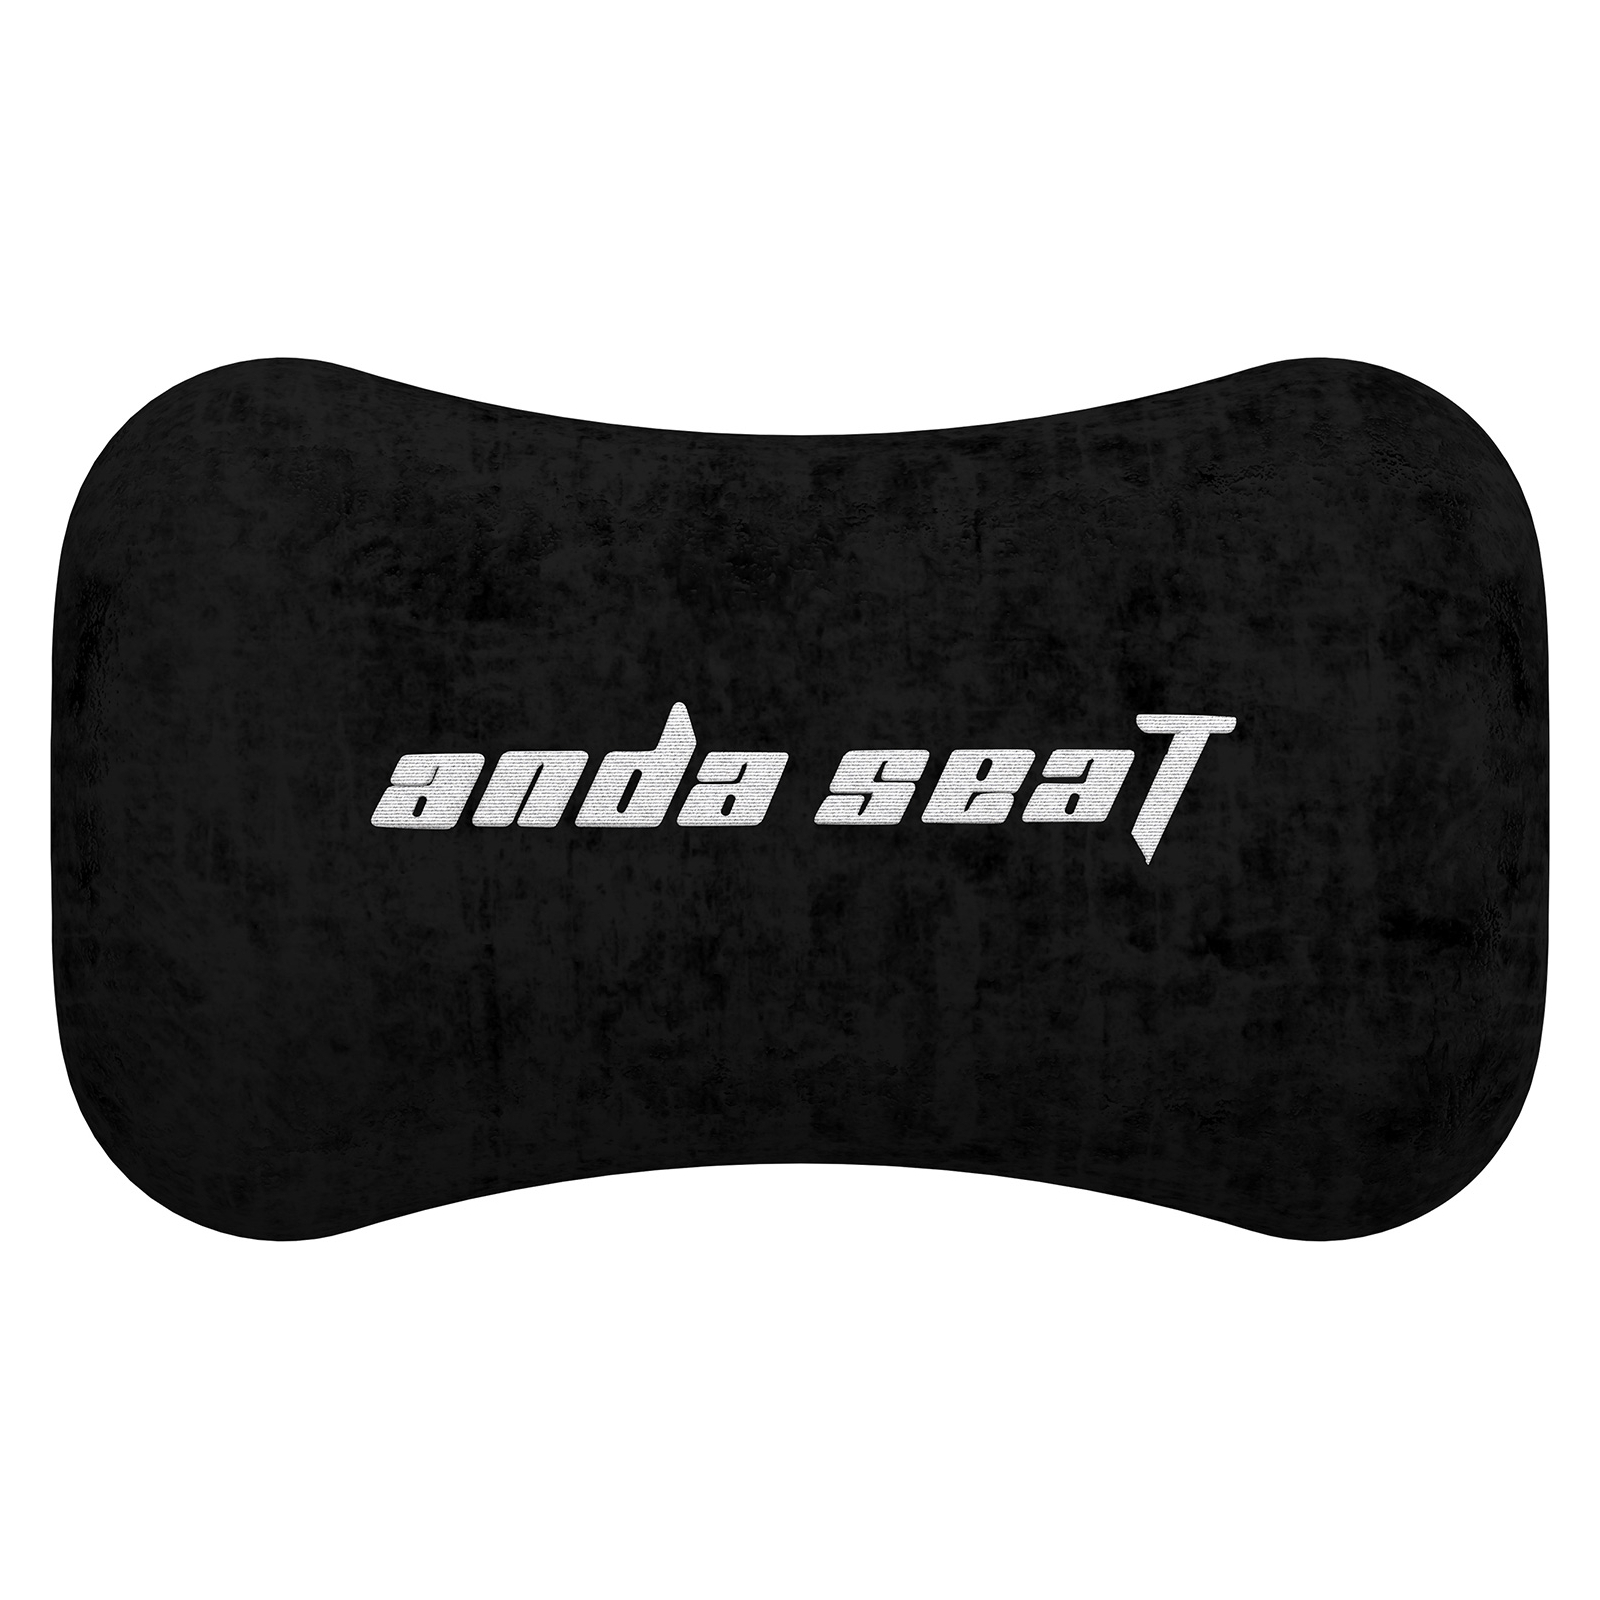 Кресло игровое Anda Seat Kaiser 3 Size L White (AD12YDC-L-01-W-PV/C) изображение 9